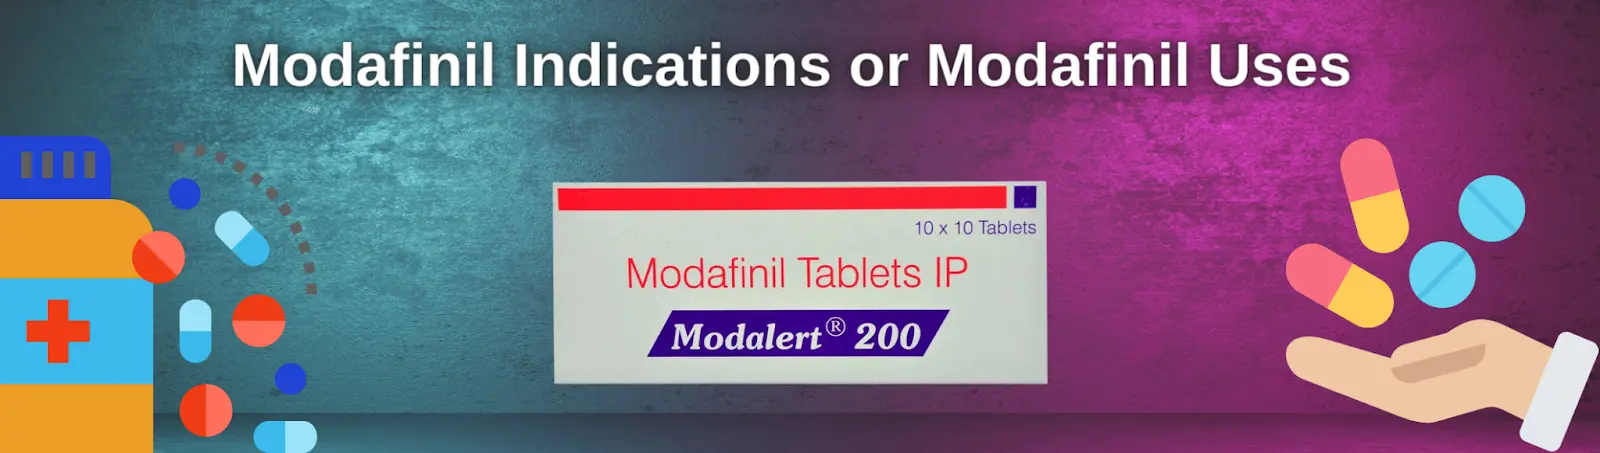 modafinil-indication